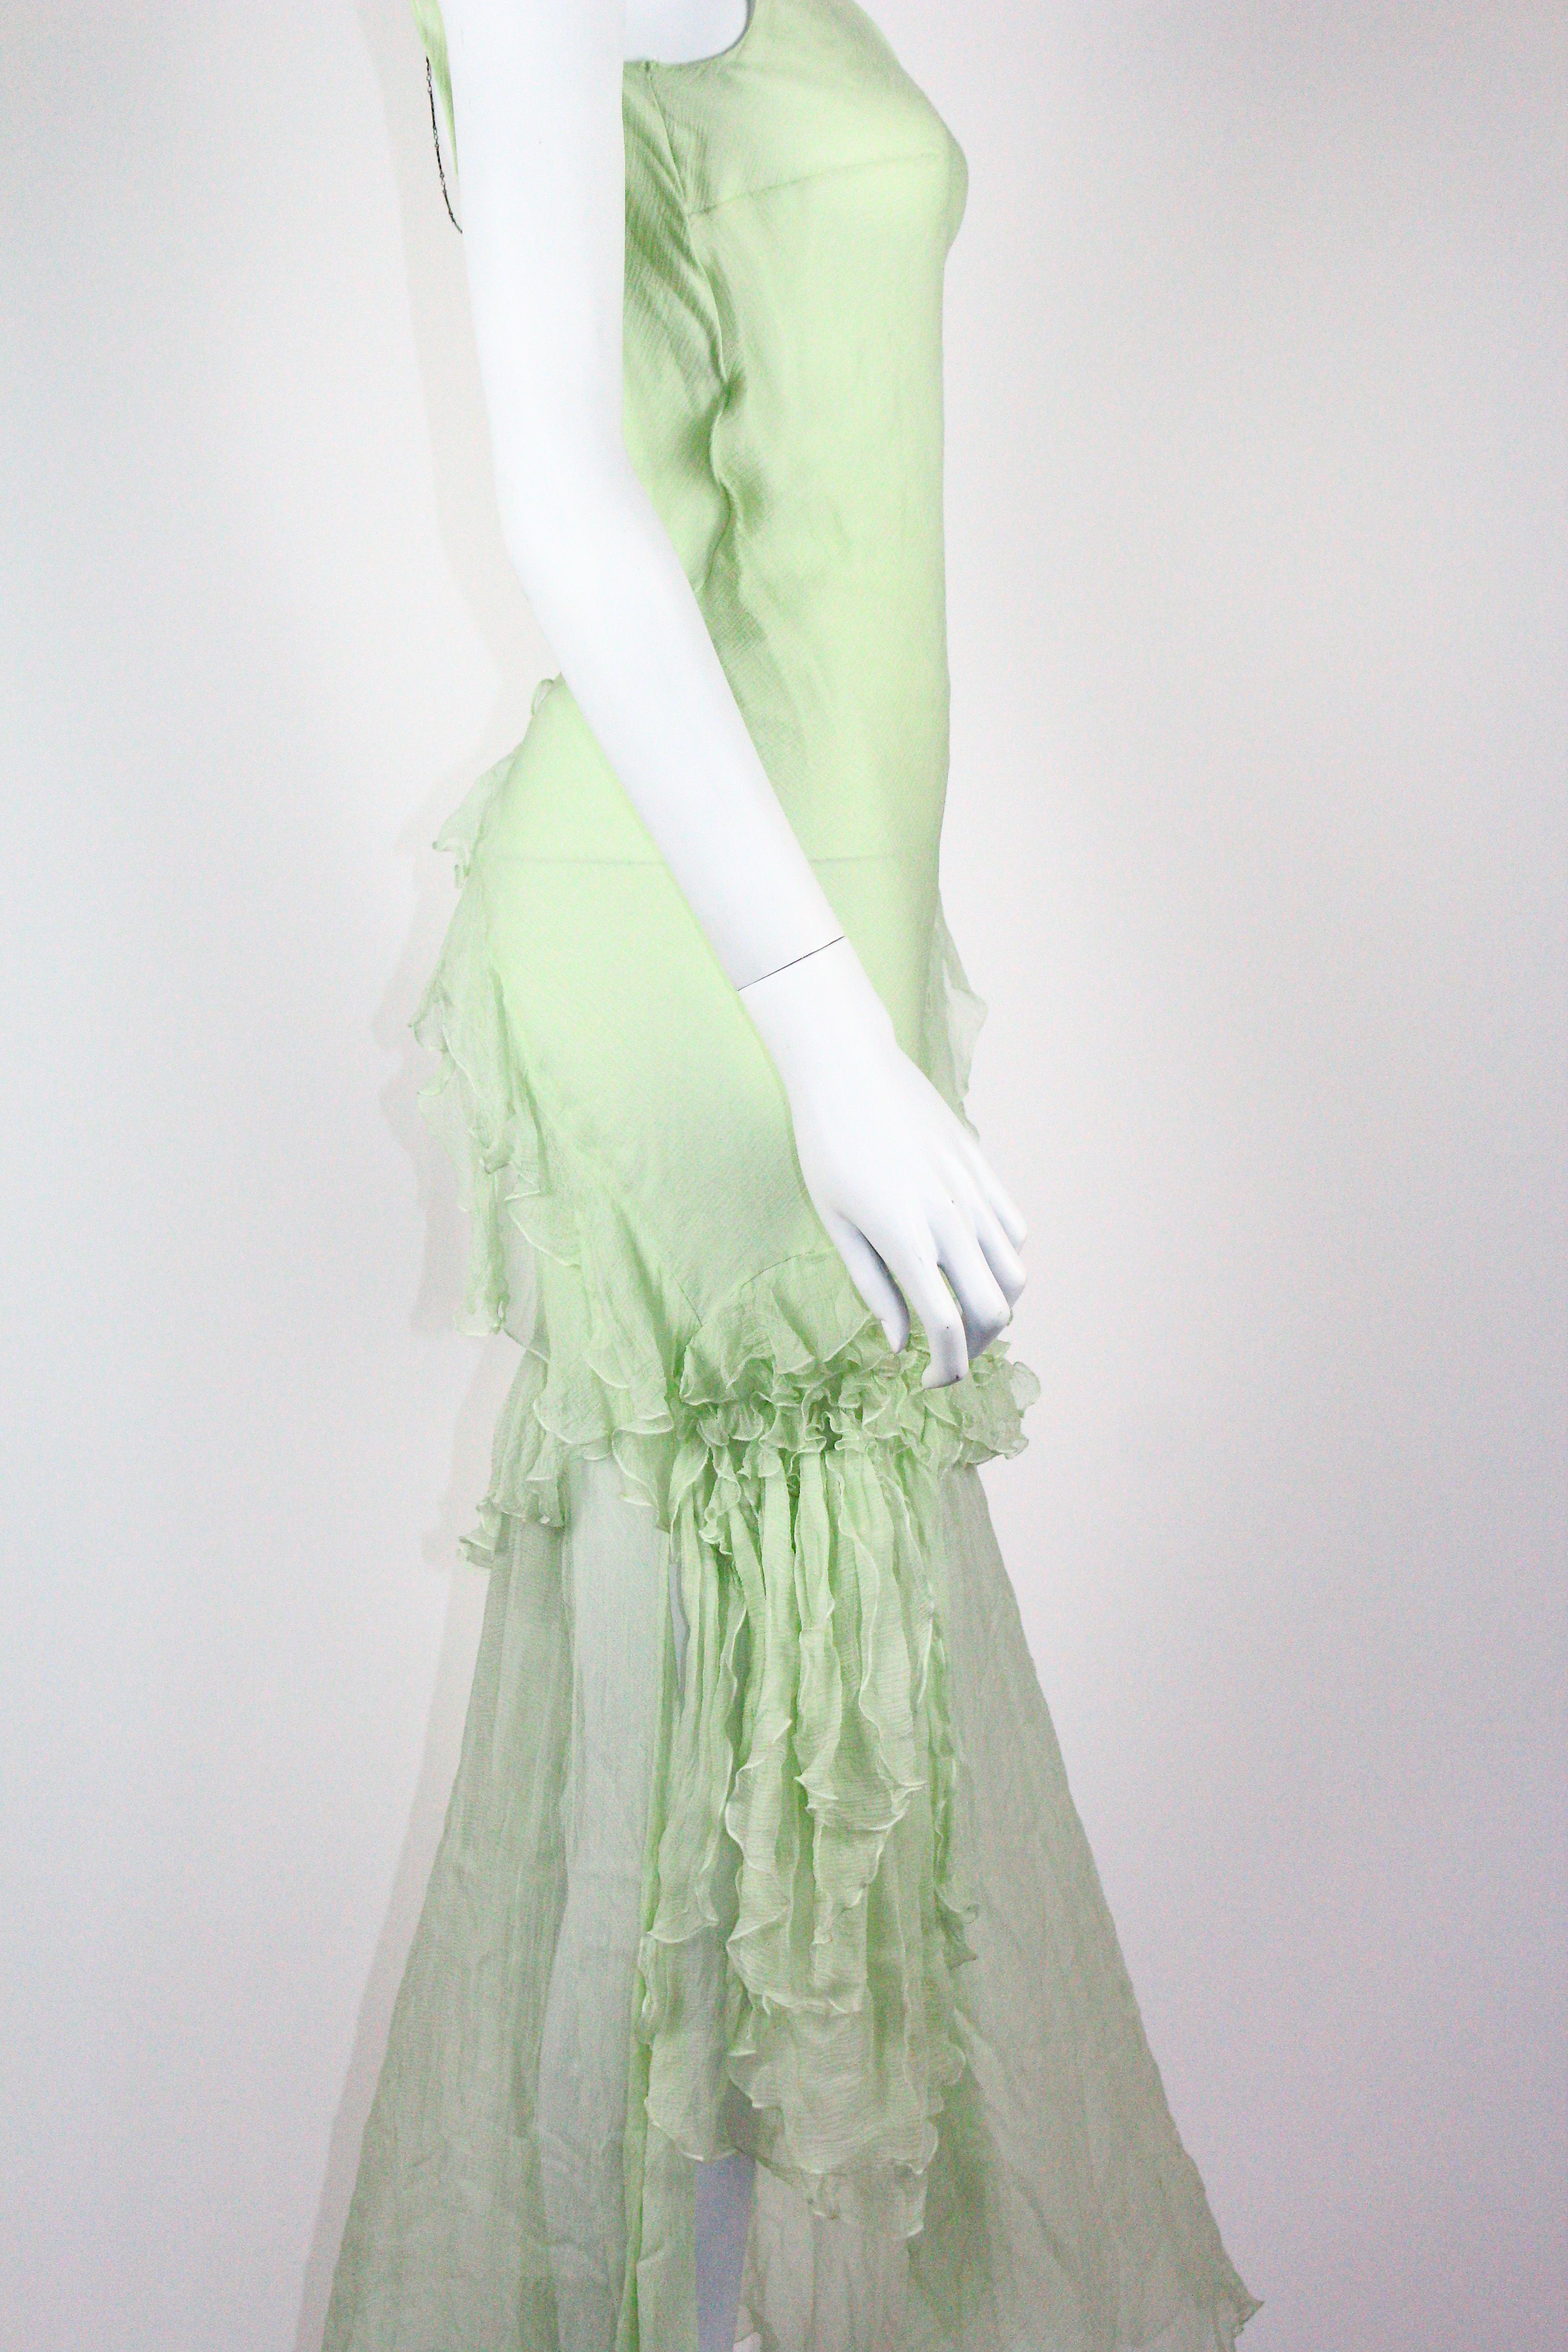 John Galliano 'Delores' Mint Green Silk Dress, F/W 1995 For Sale 2